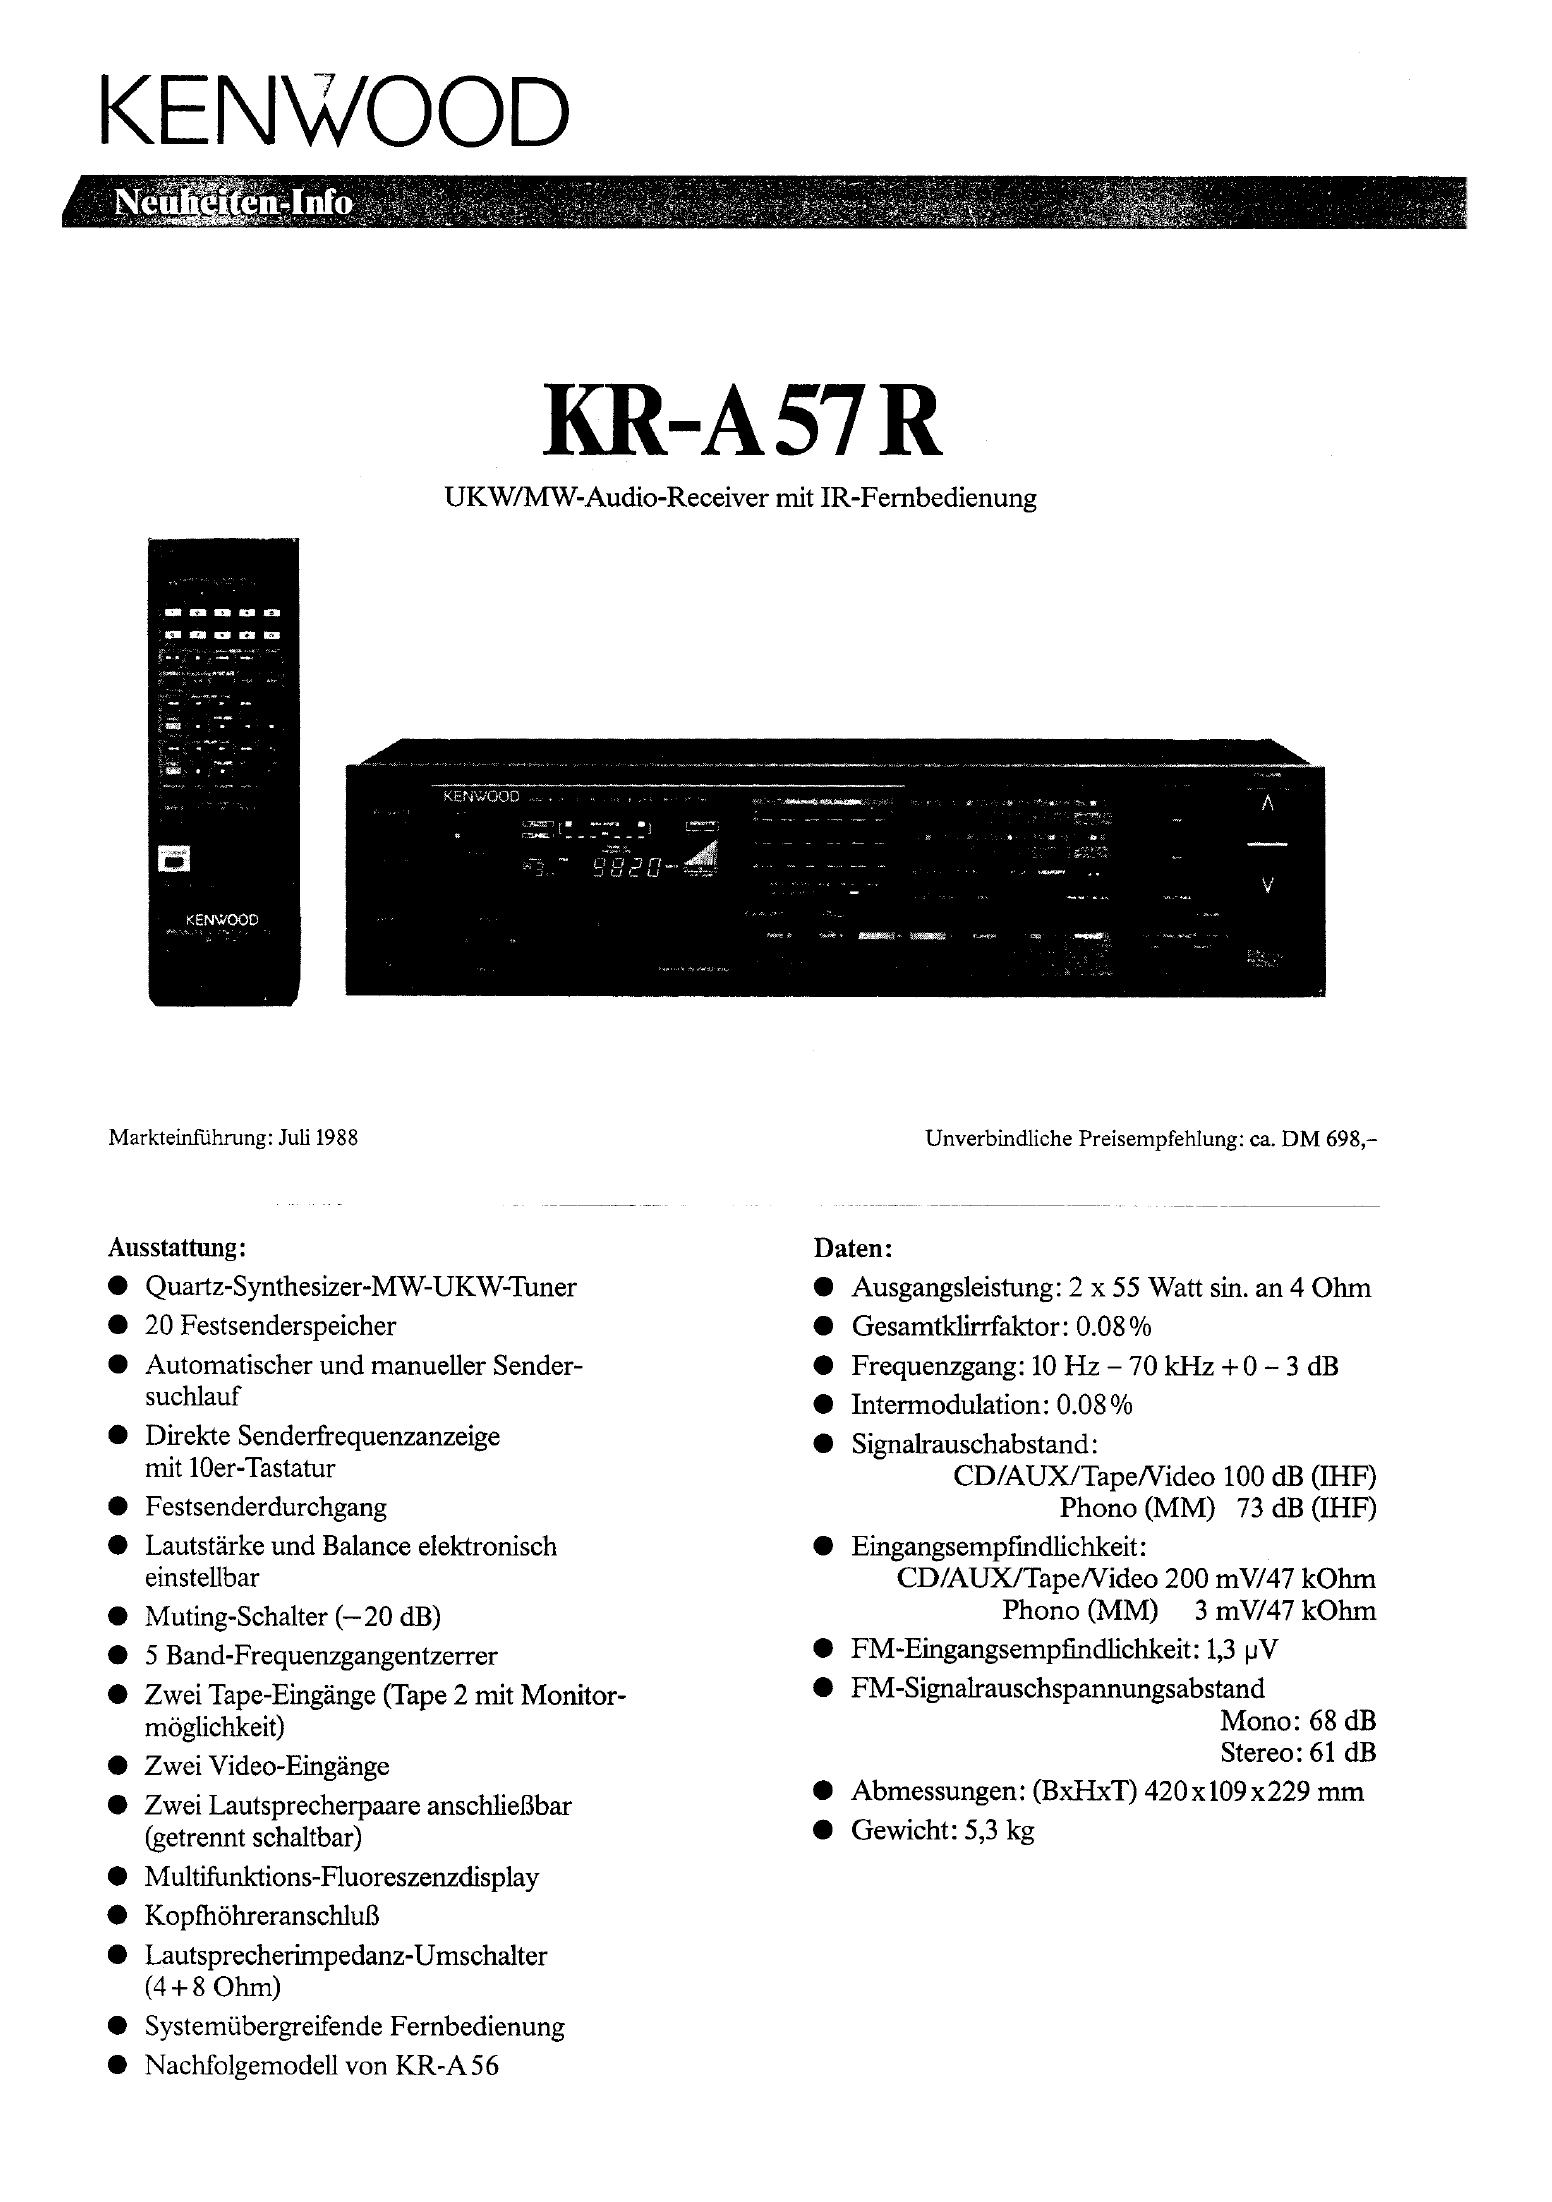 Kenwood KR-A 57 R-Prospekt-1988.jpg